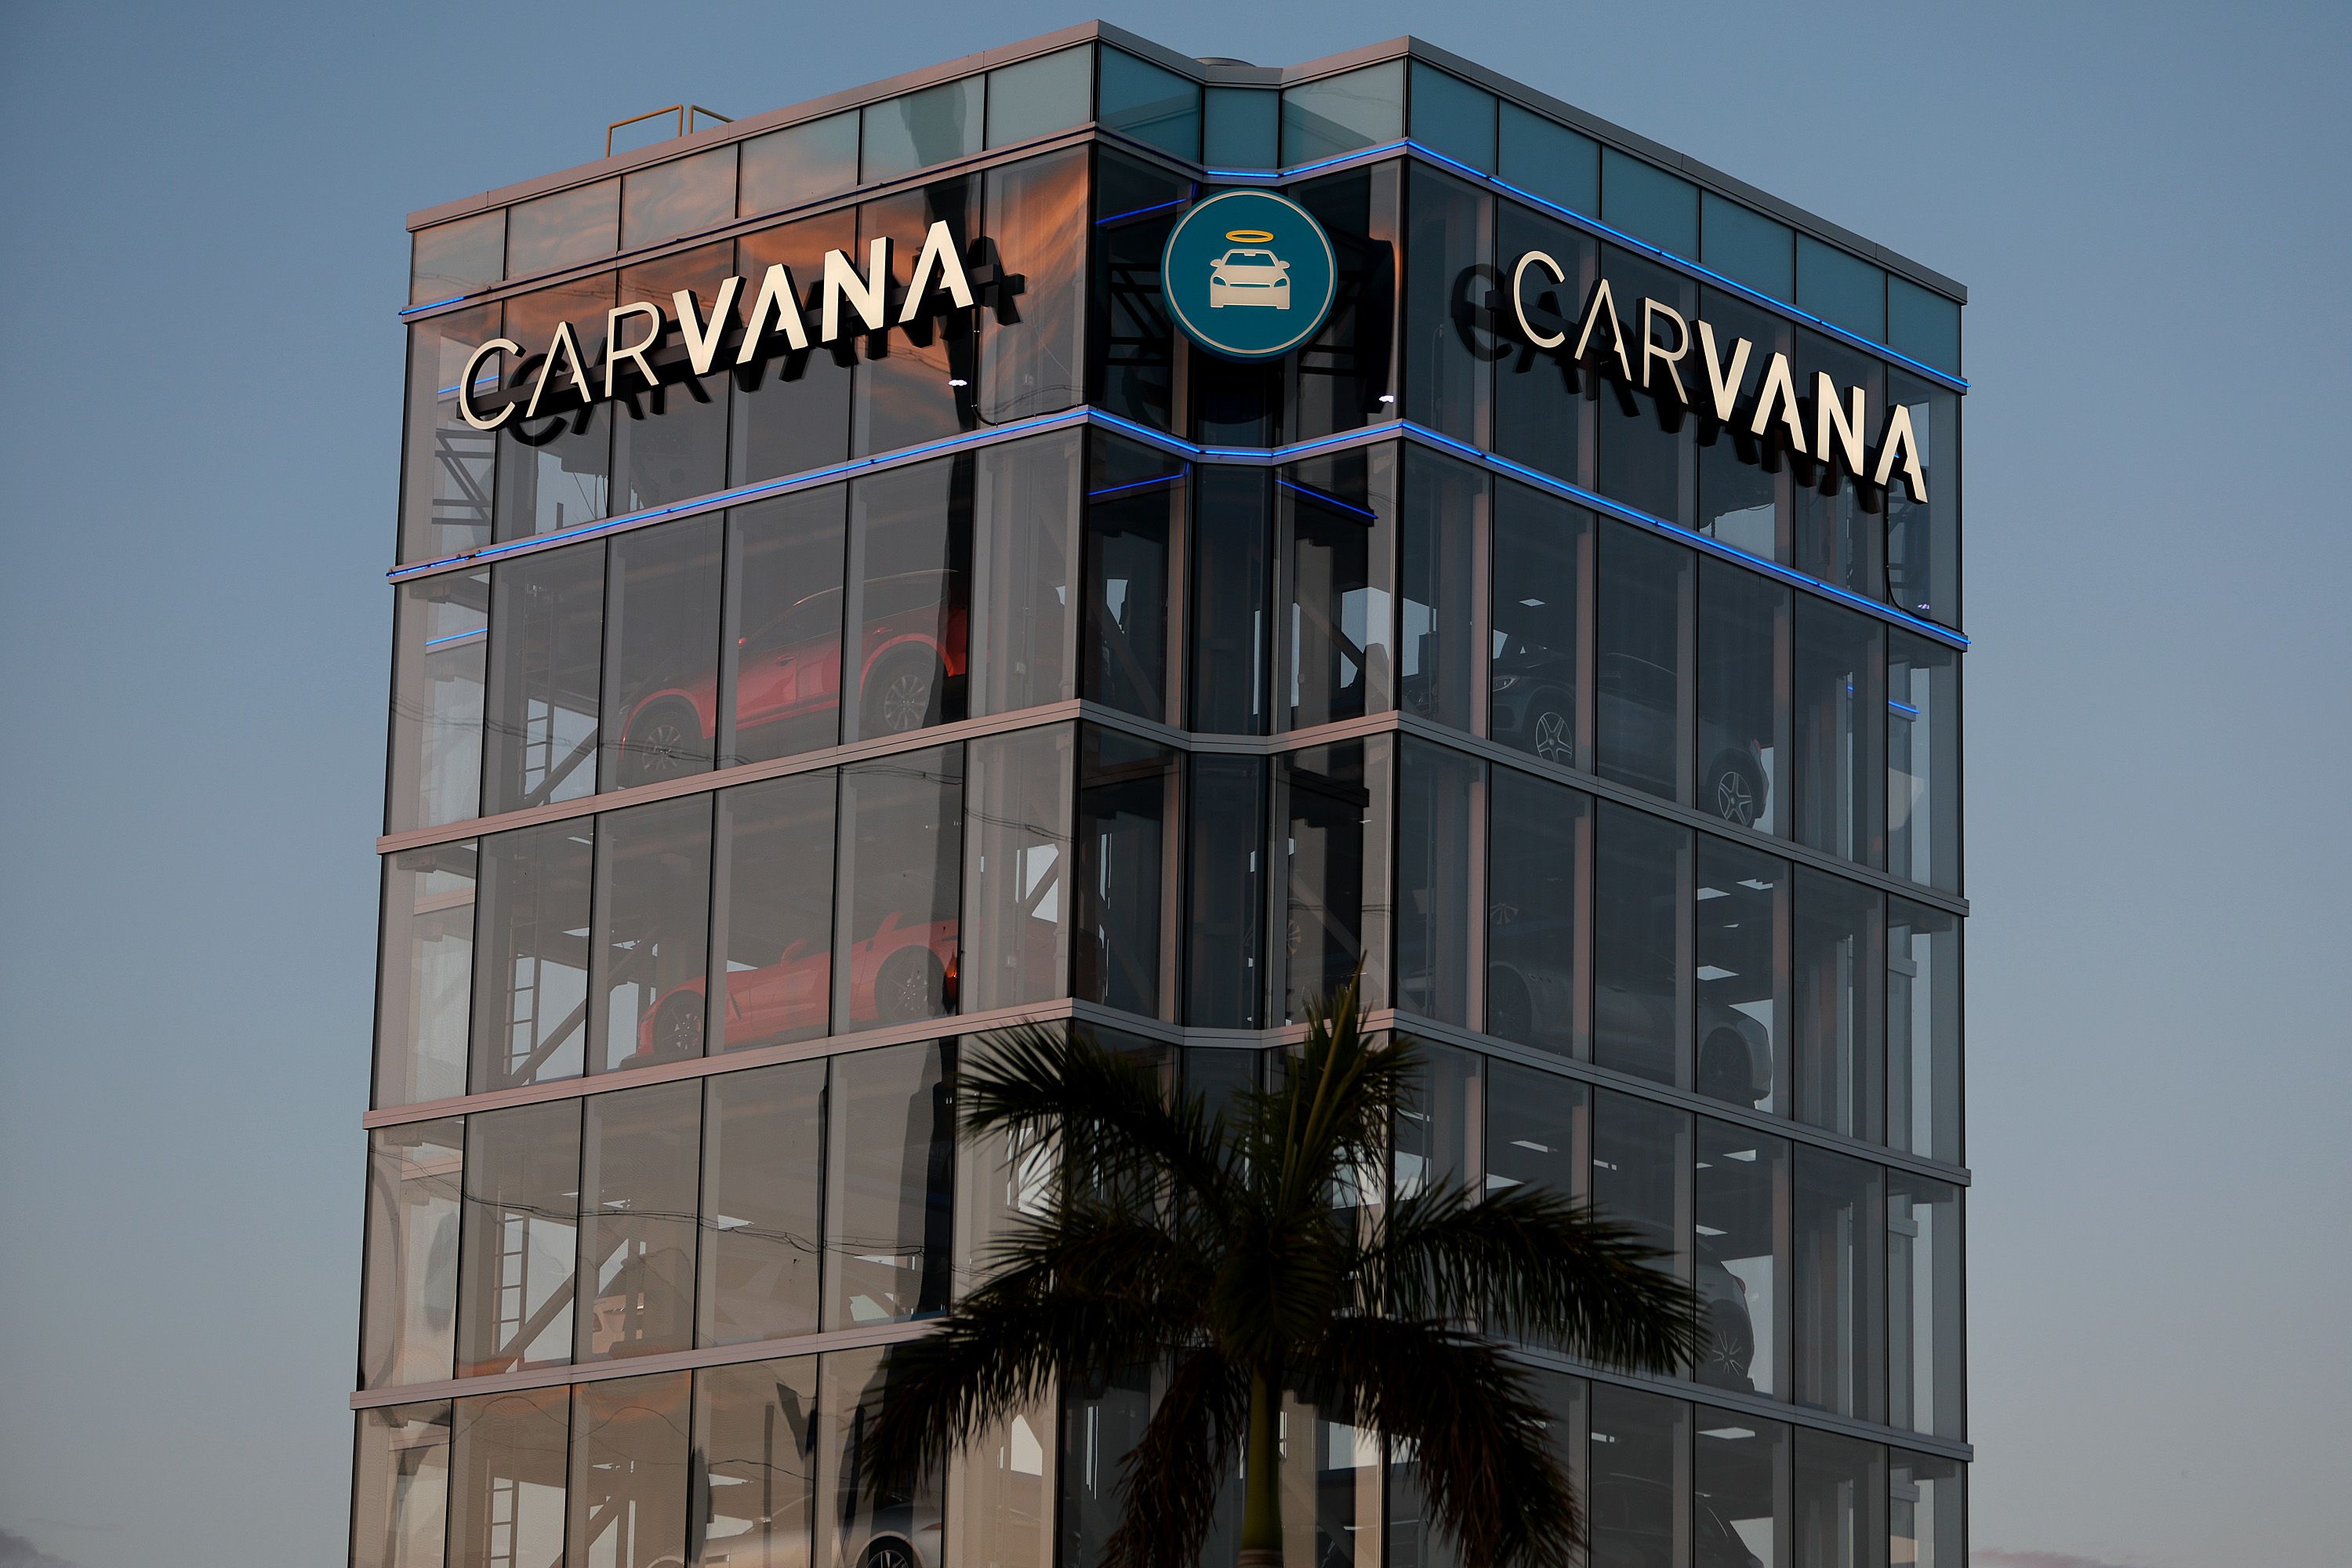 How Does Carvana Work?